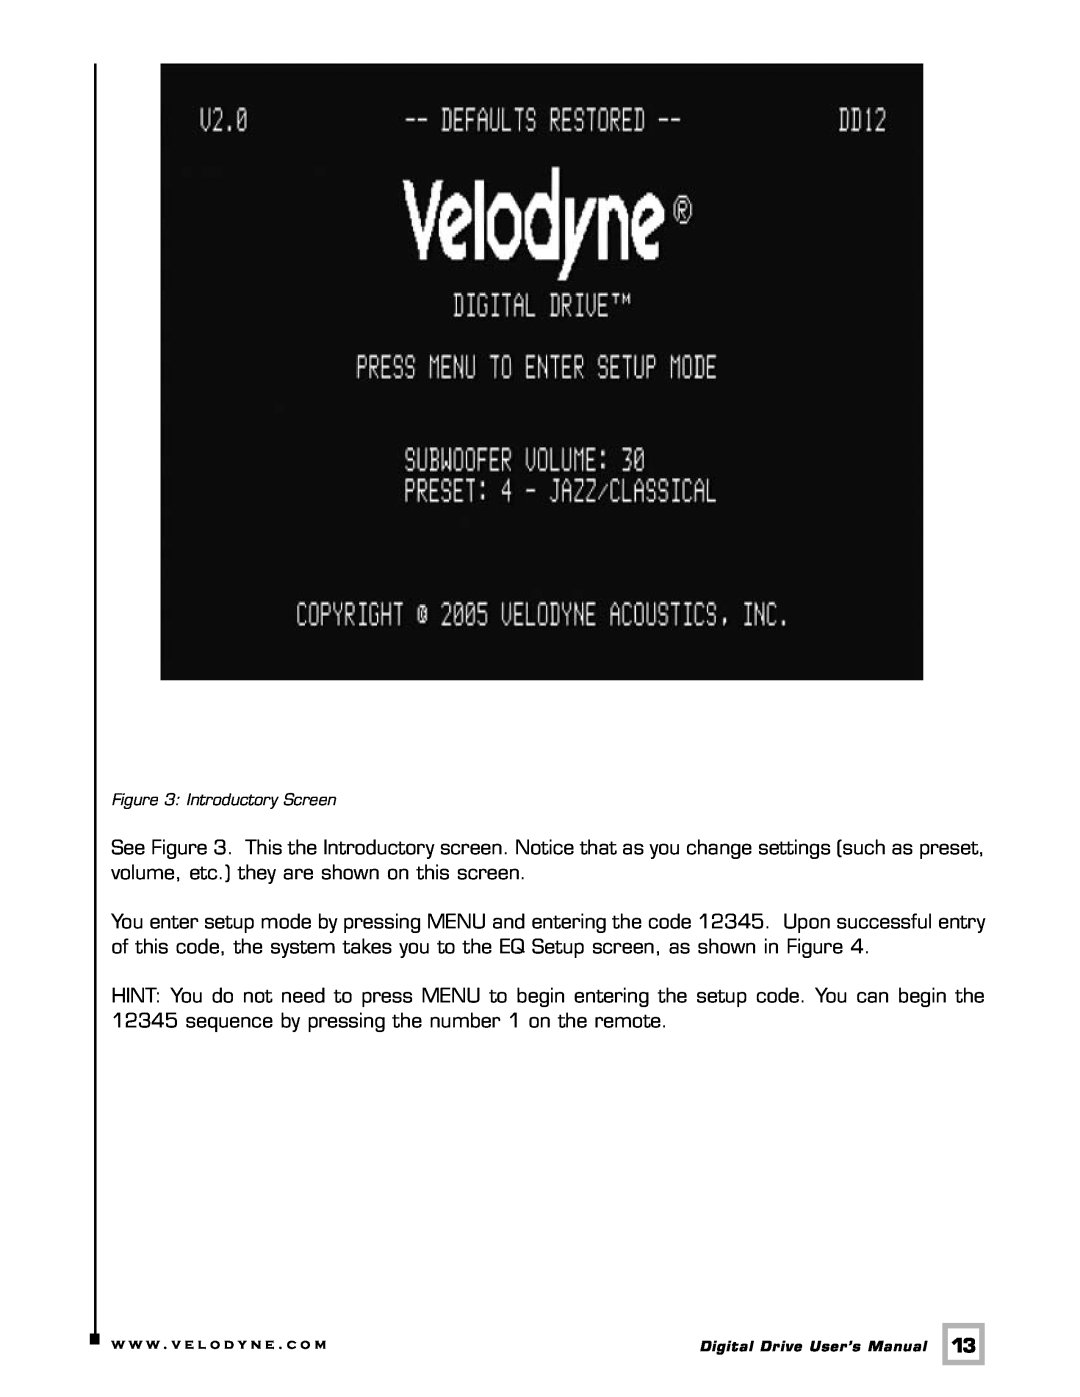 Velodyne Acoustics Digital Drive user manual Introductory Screen 